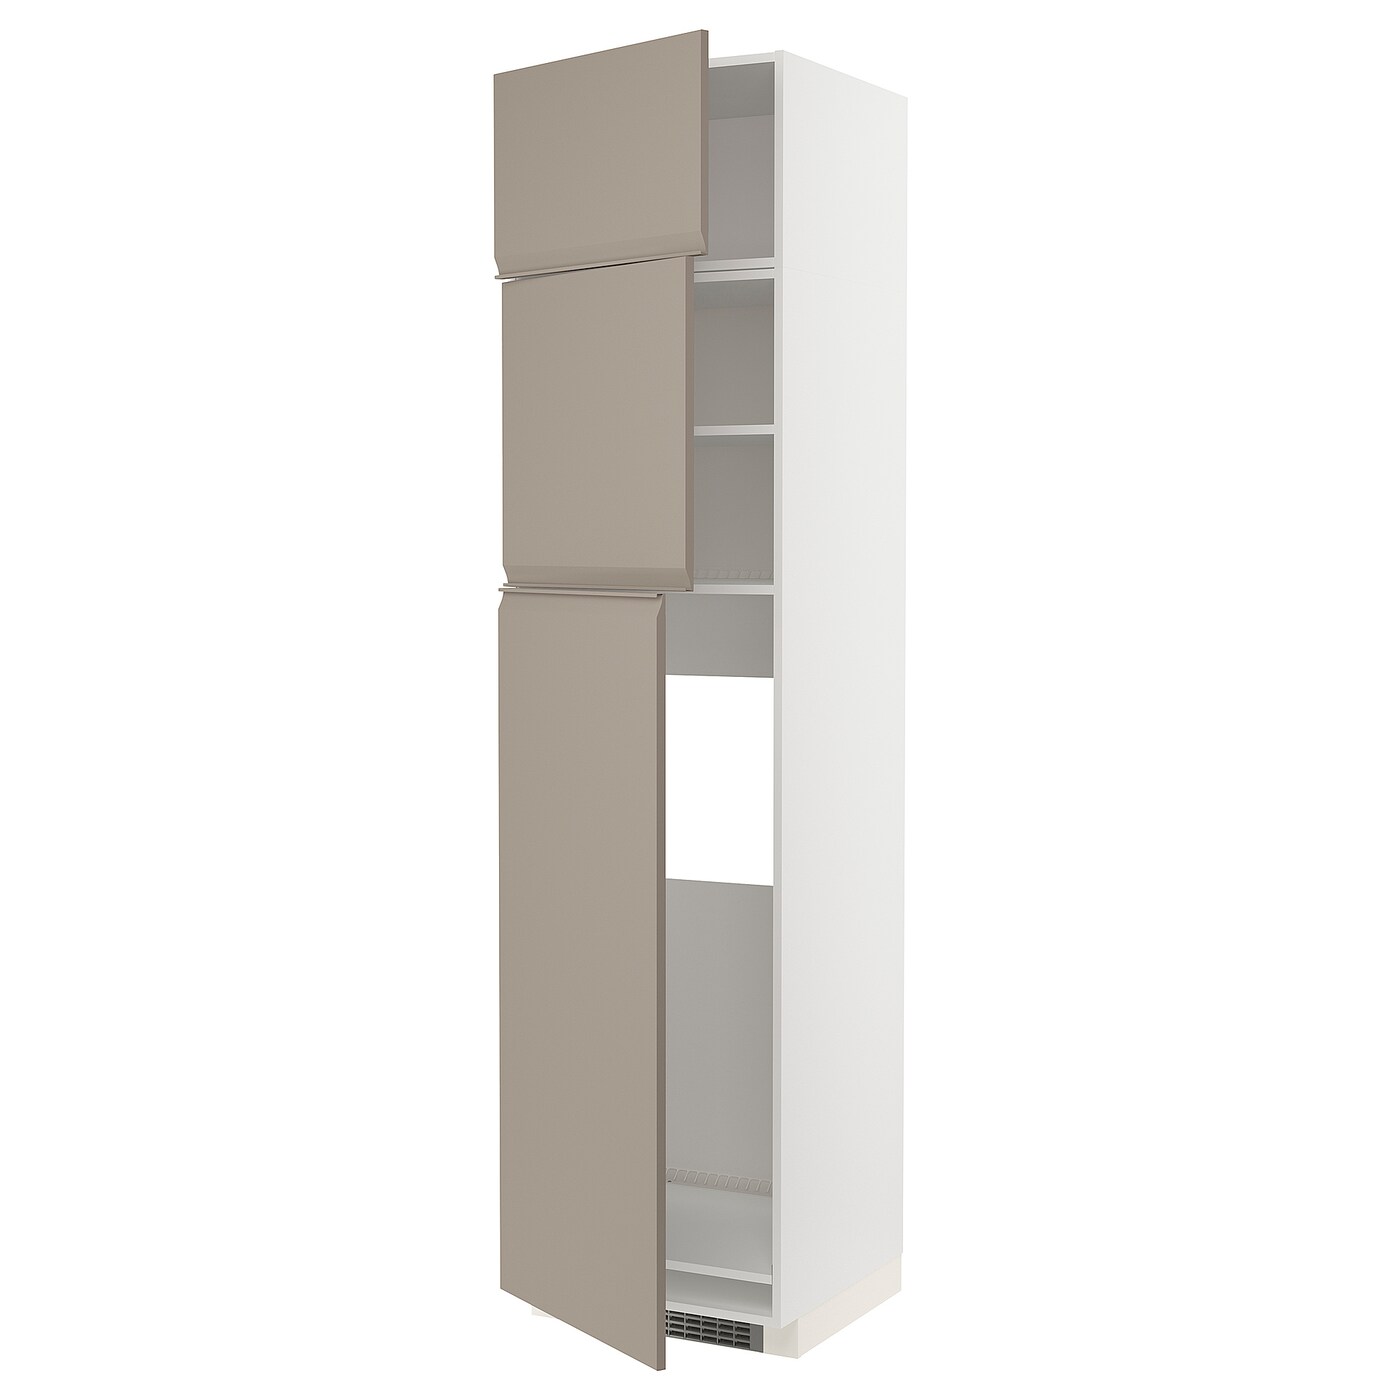 Высокий холодильный шкаф - IKEA METOD/МЕТОД ИКЕА, 60х60х240 см, серый/белый